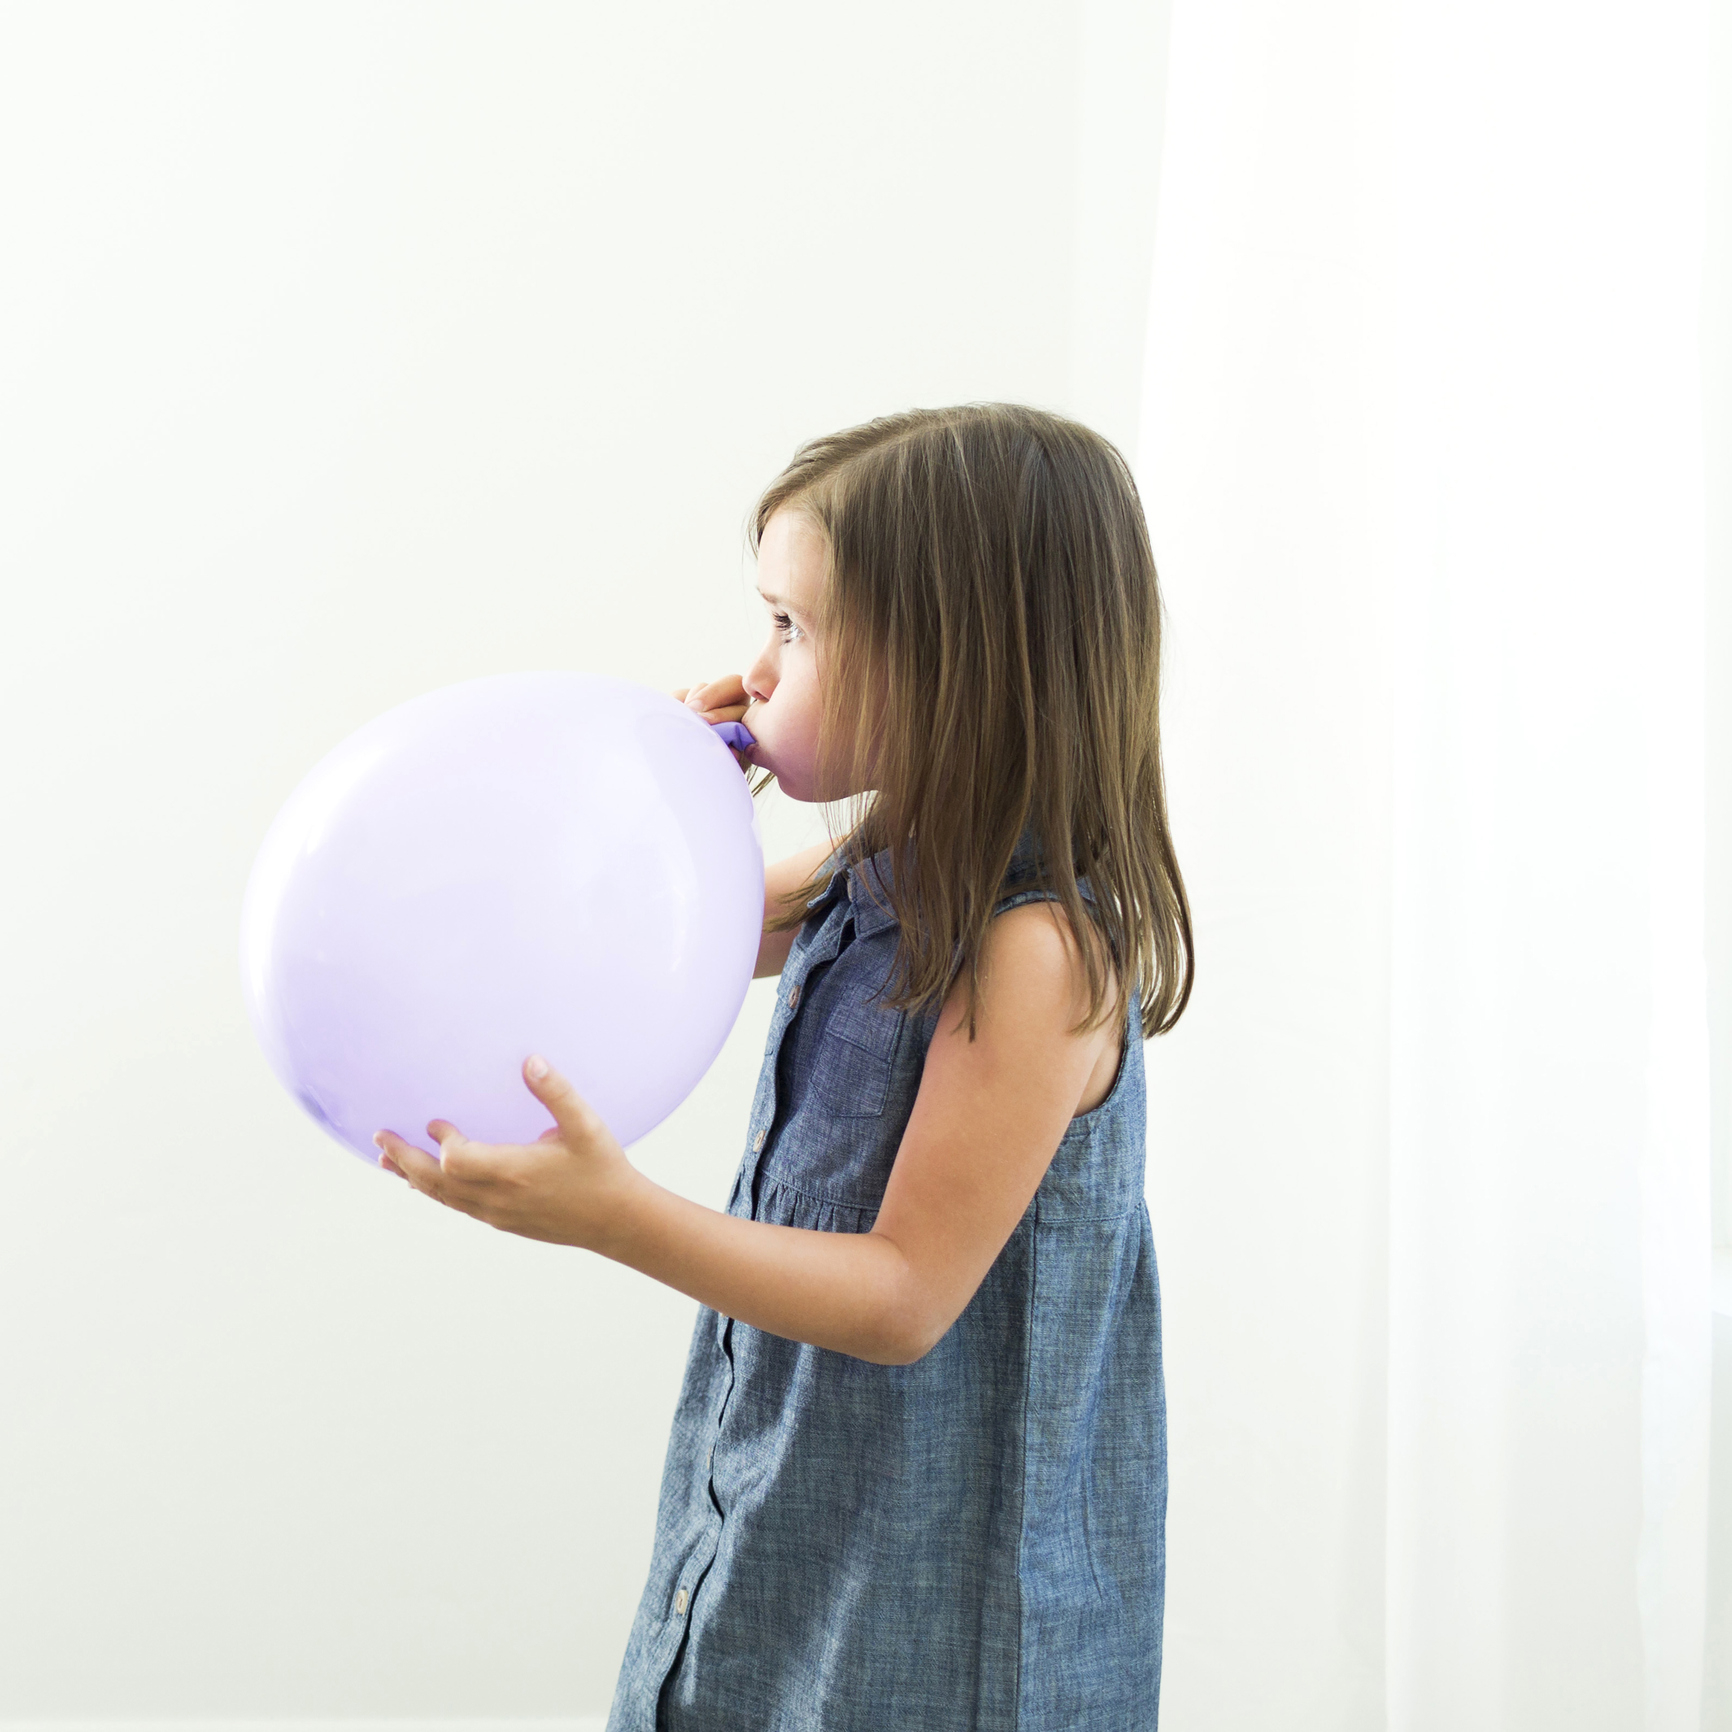 A girl blowing a balloon